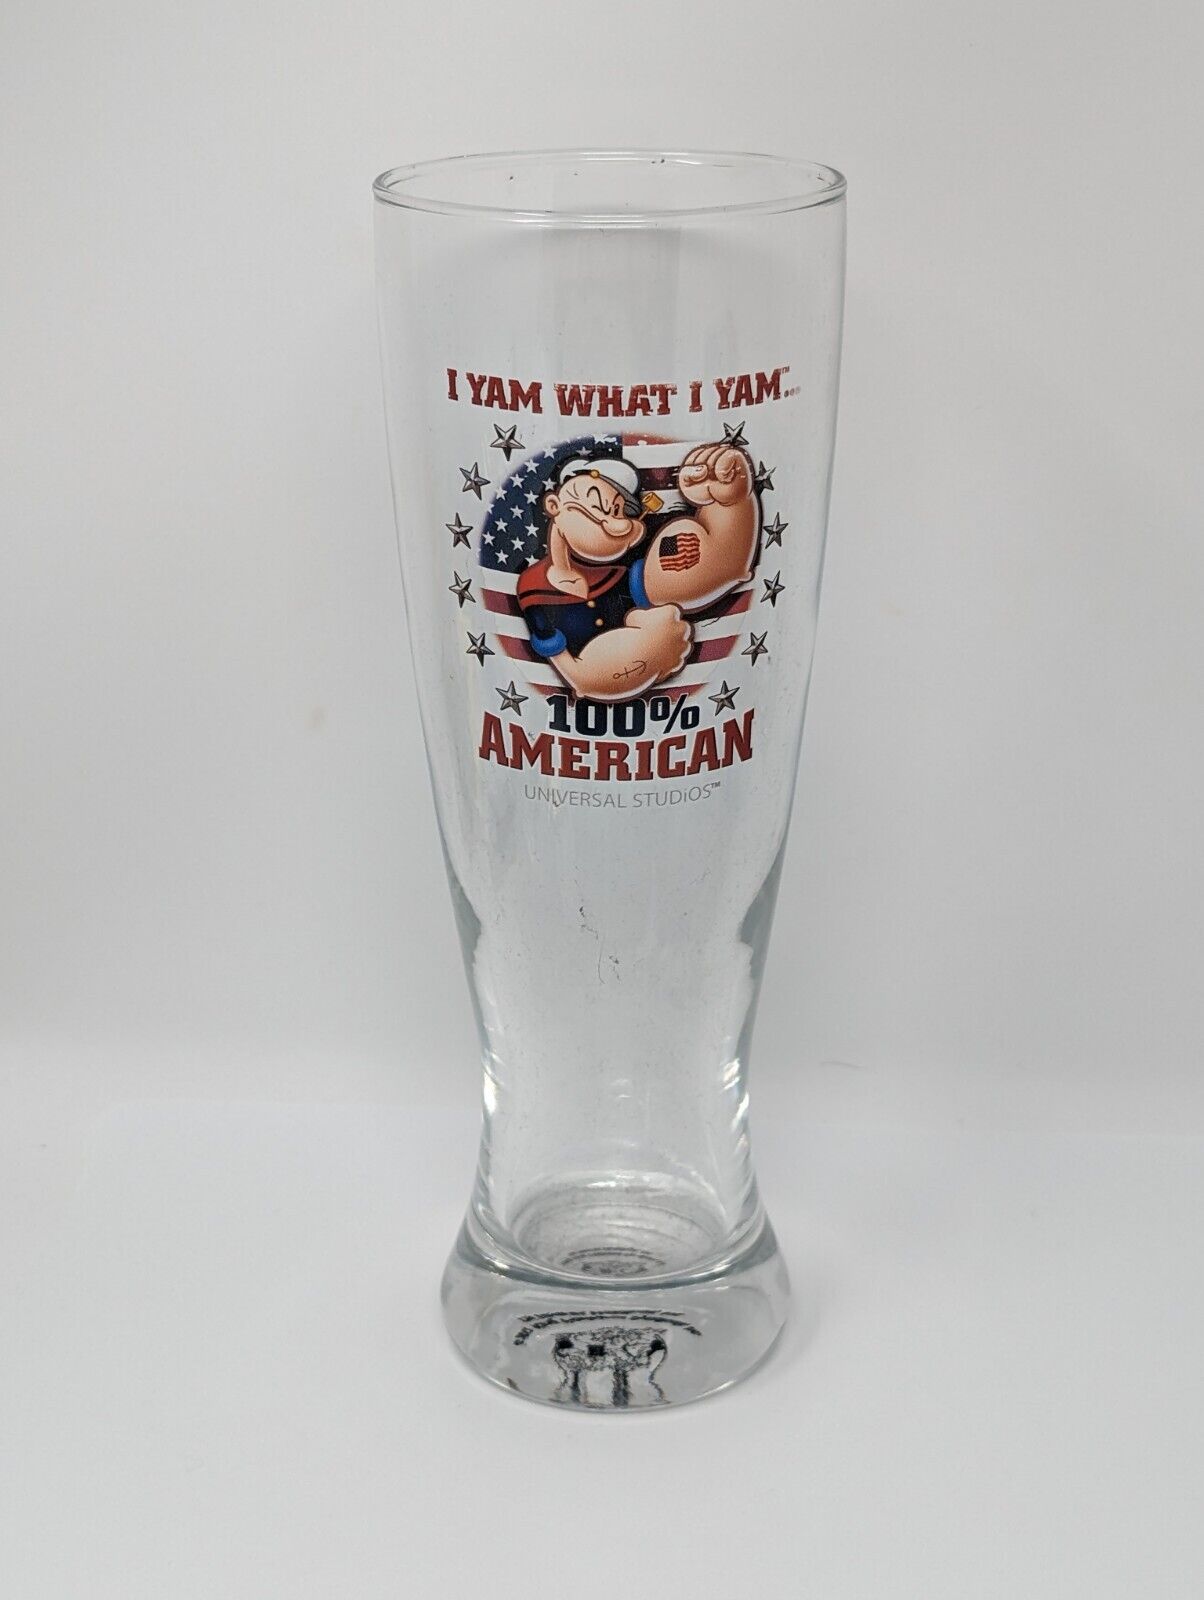 Popeye I Yam What I Yam 100% American Beer Glass Universal Studios